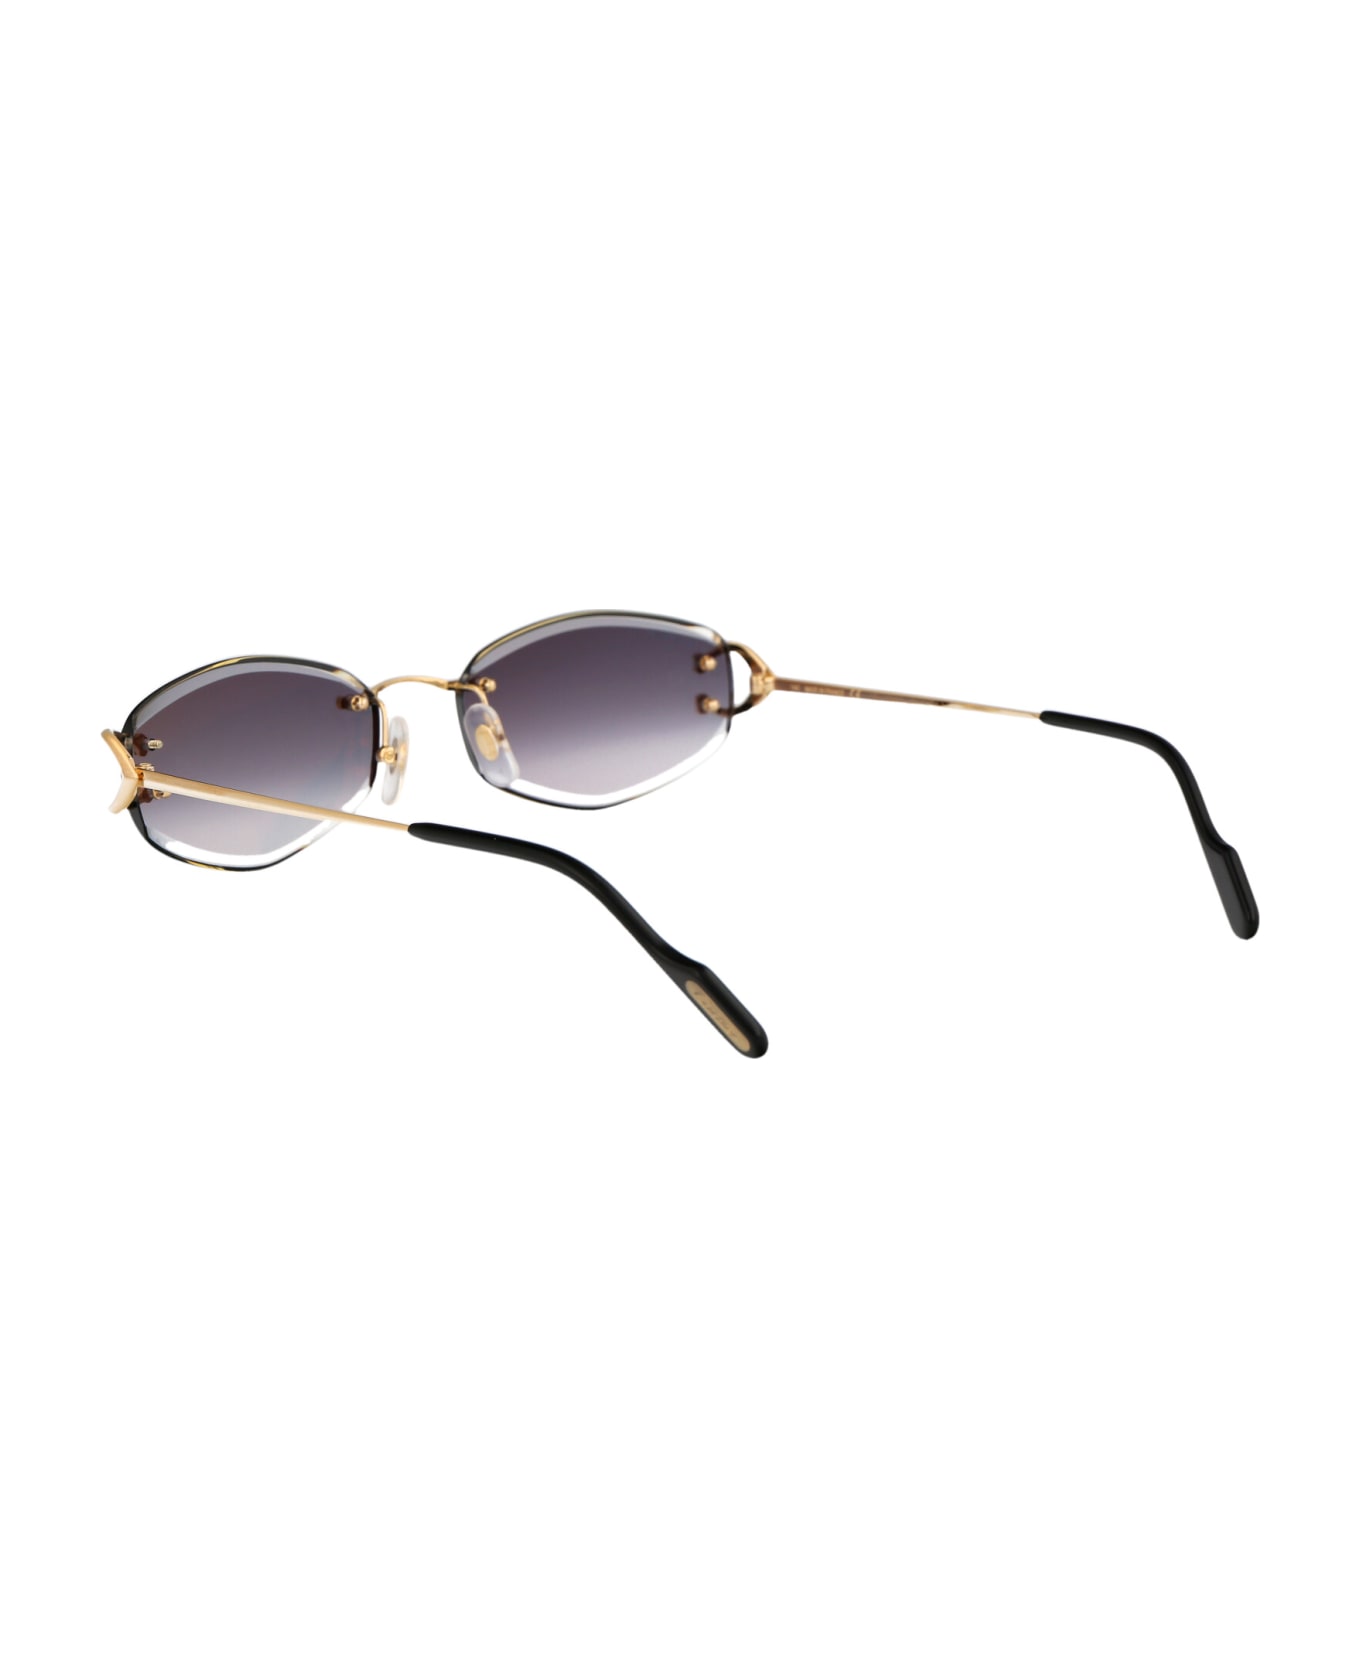 Cartier Eyewear Ct0467s Sunglasses - 001 GOLD GOLD GREY サングラス